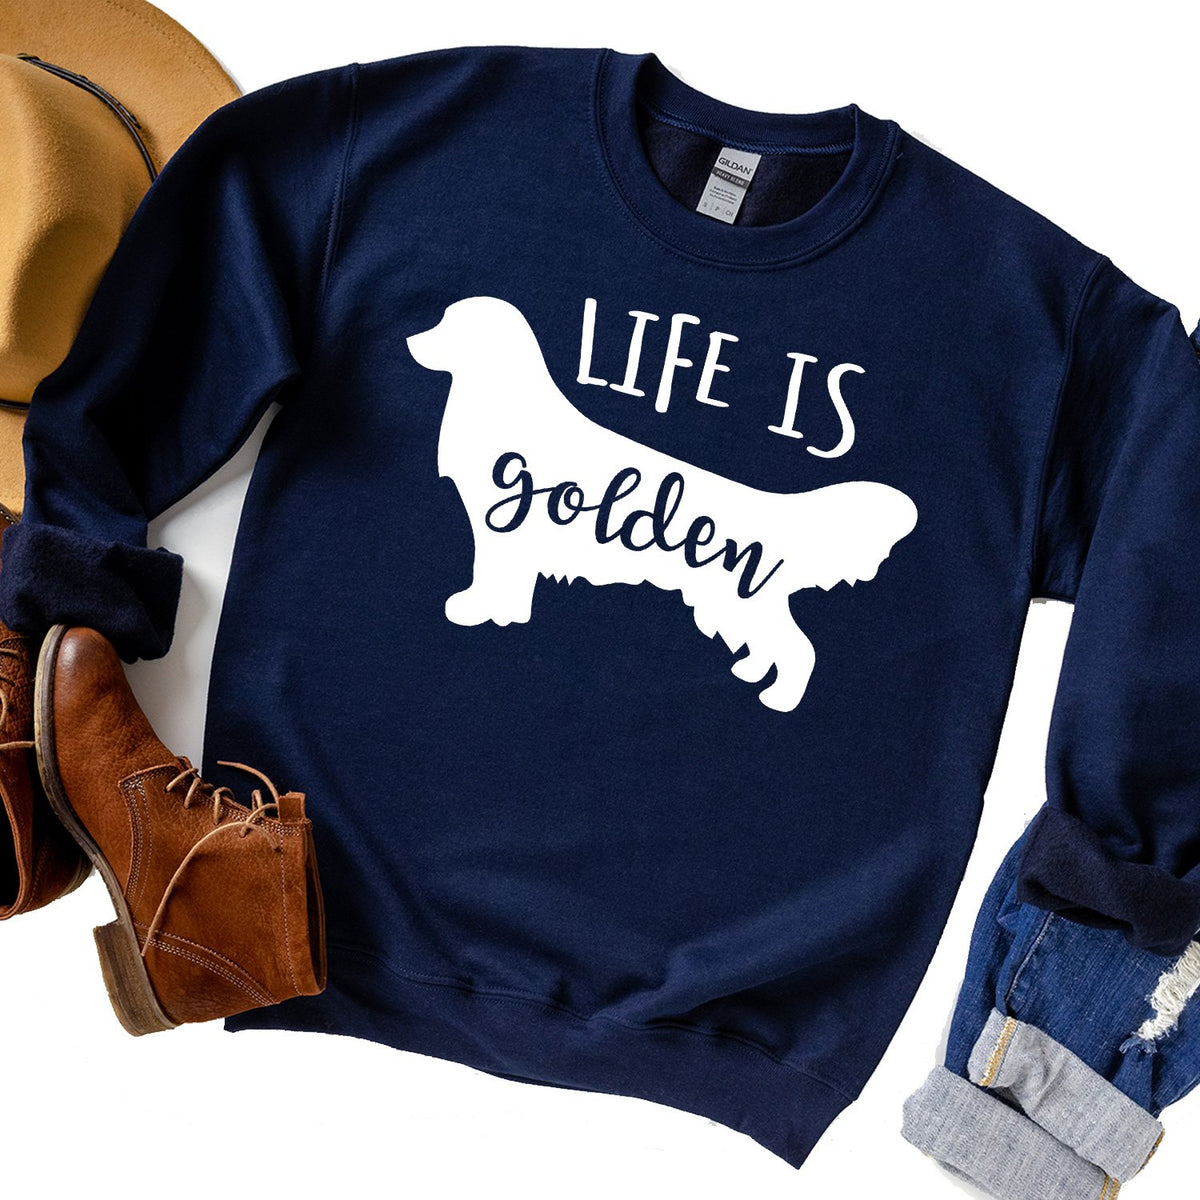 Life is Golden Retriever - Long Sleeve Heavy Crewneck Sweatshirt